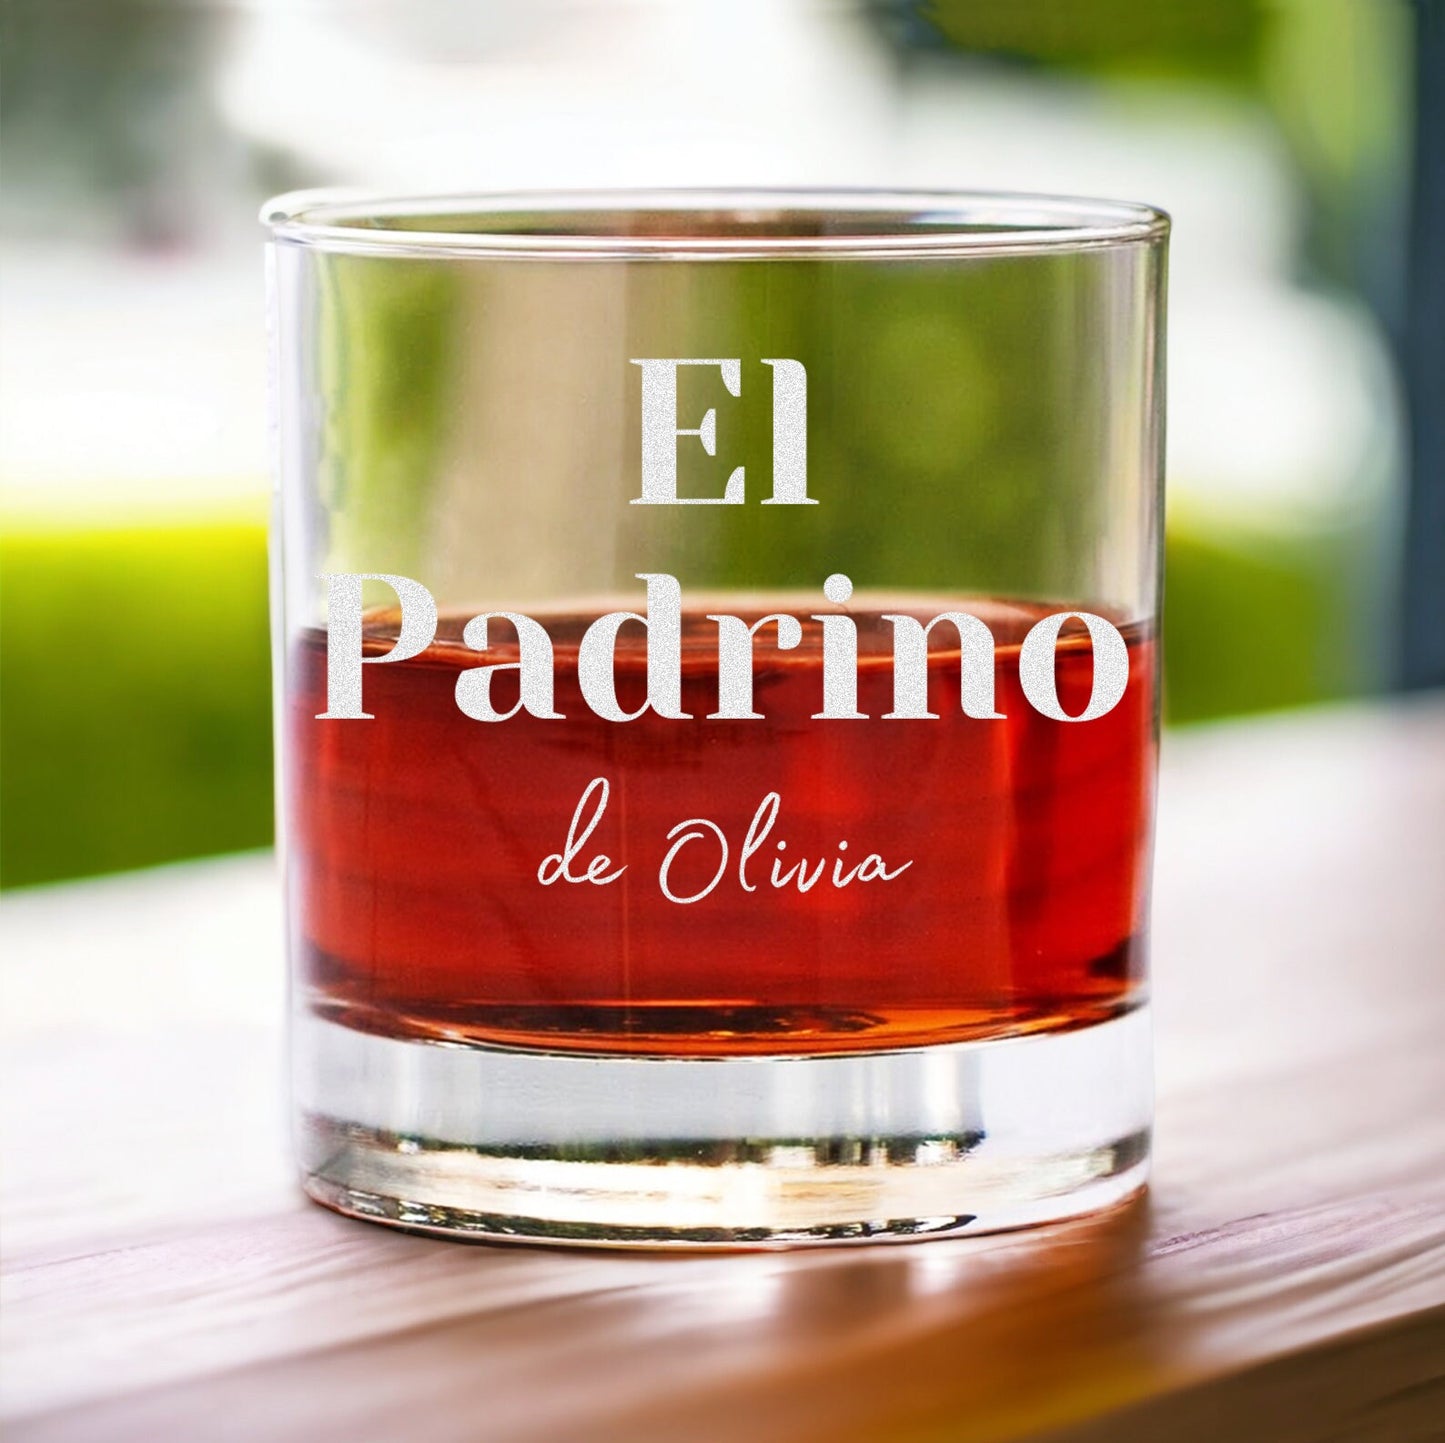 Personalized El Padrino La Madrina Glass Set